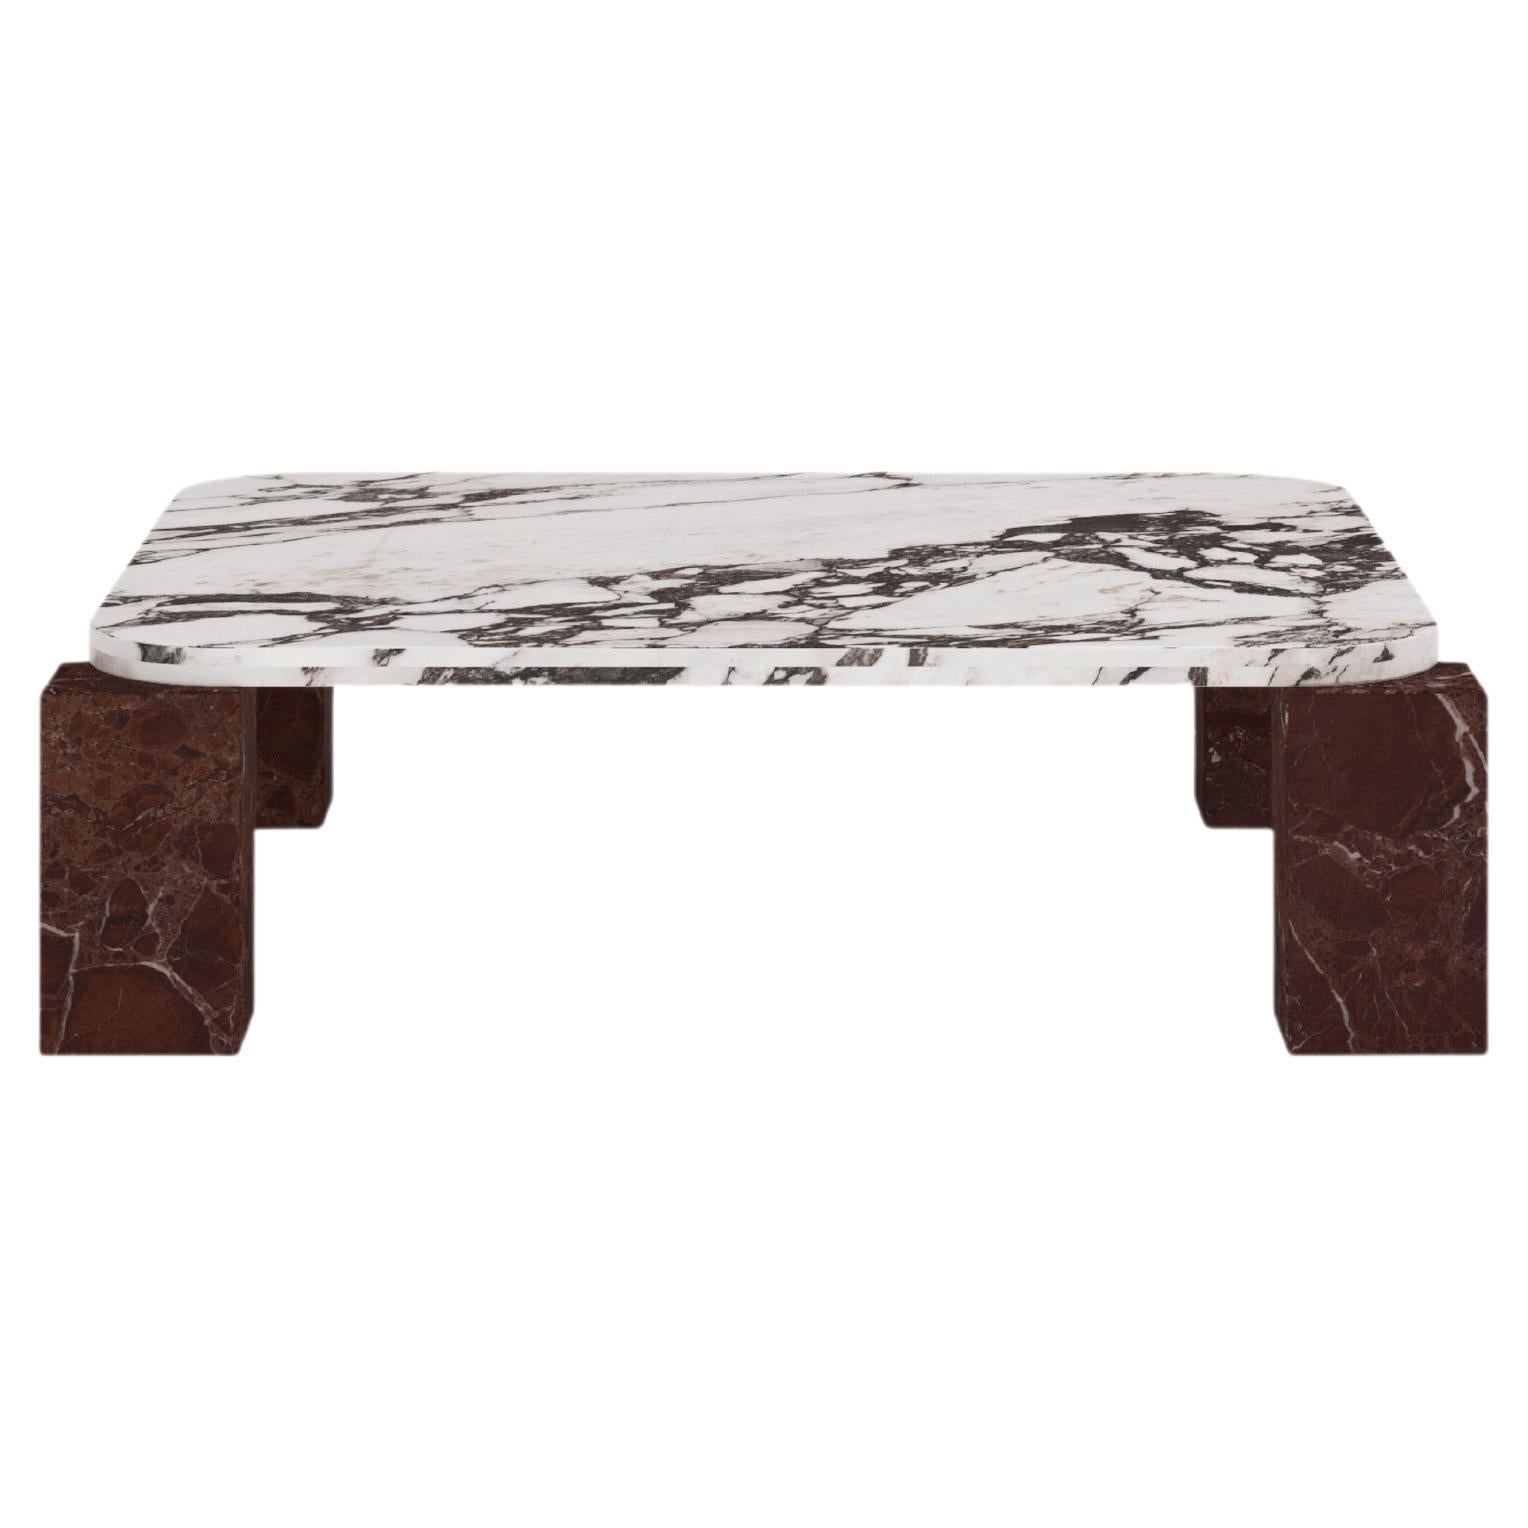 FORM(LA) Cubo Square Coffee Table 56”L x 56"W x 14”H Viola & Rosso Marble For Sale